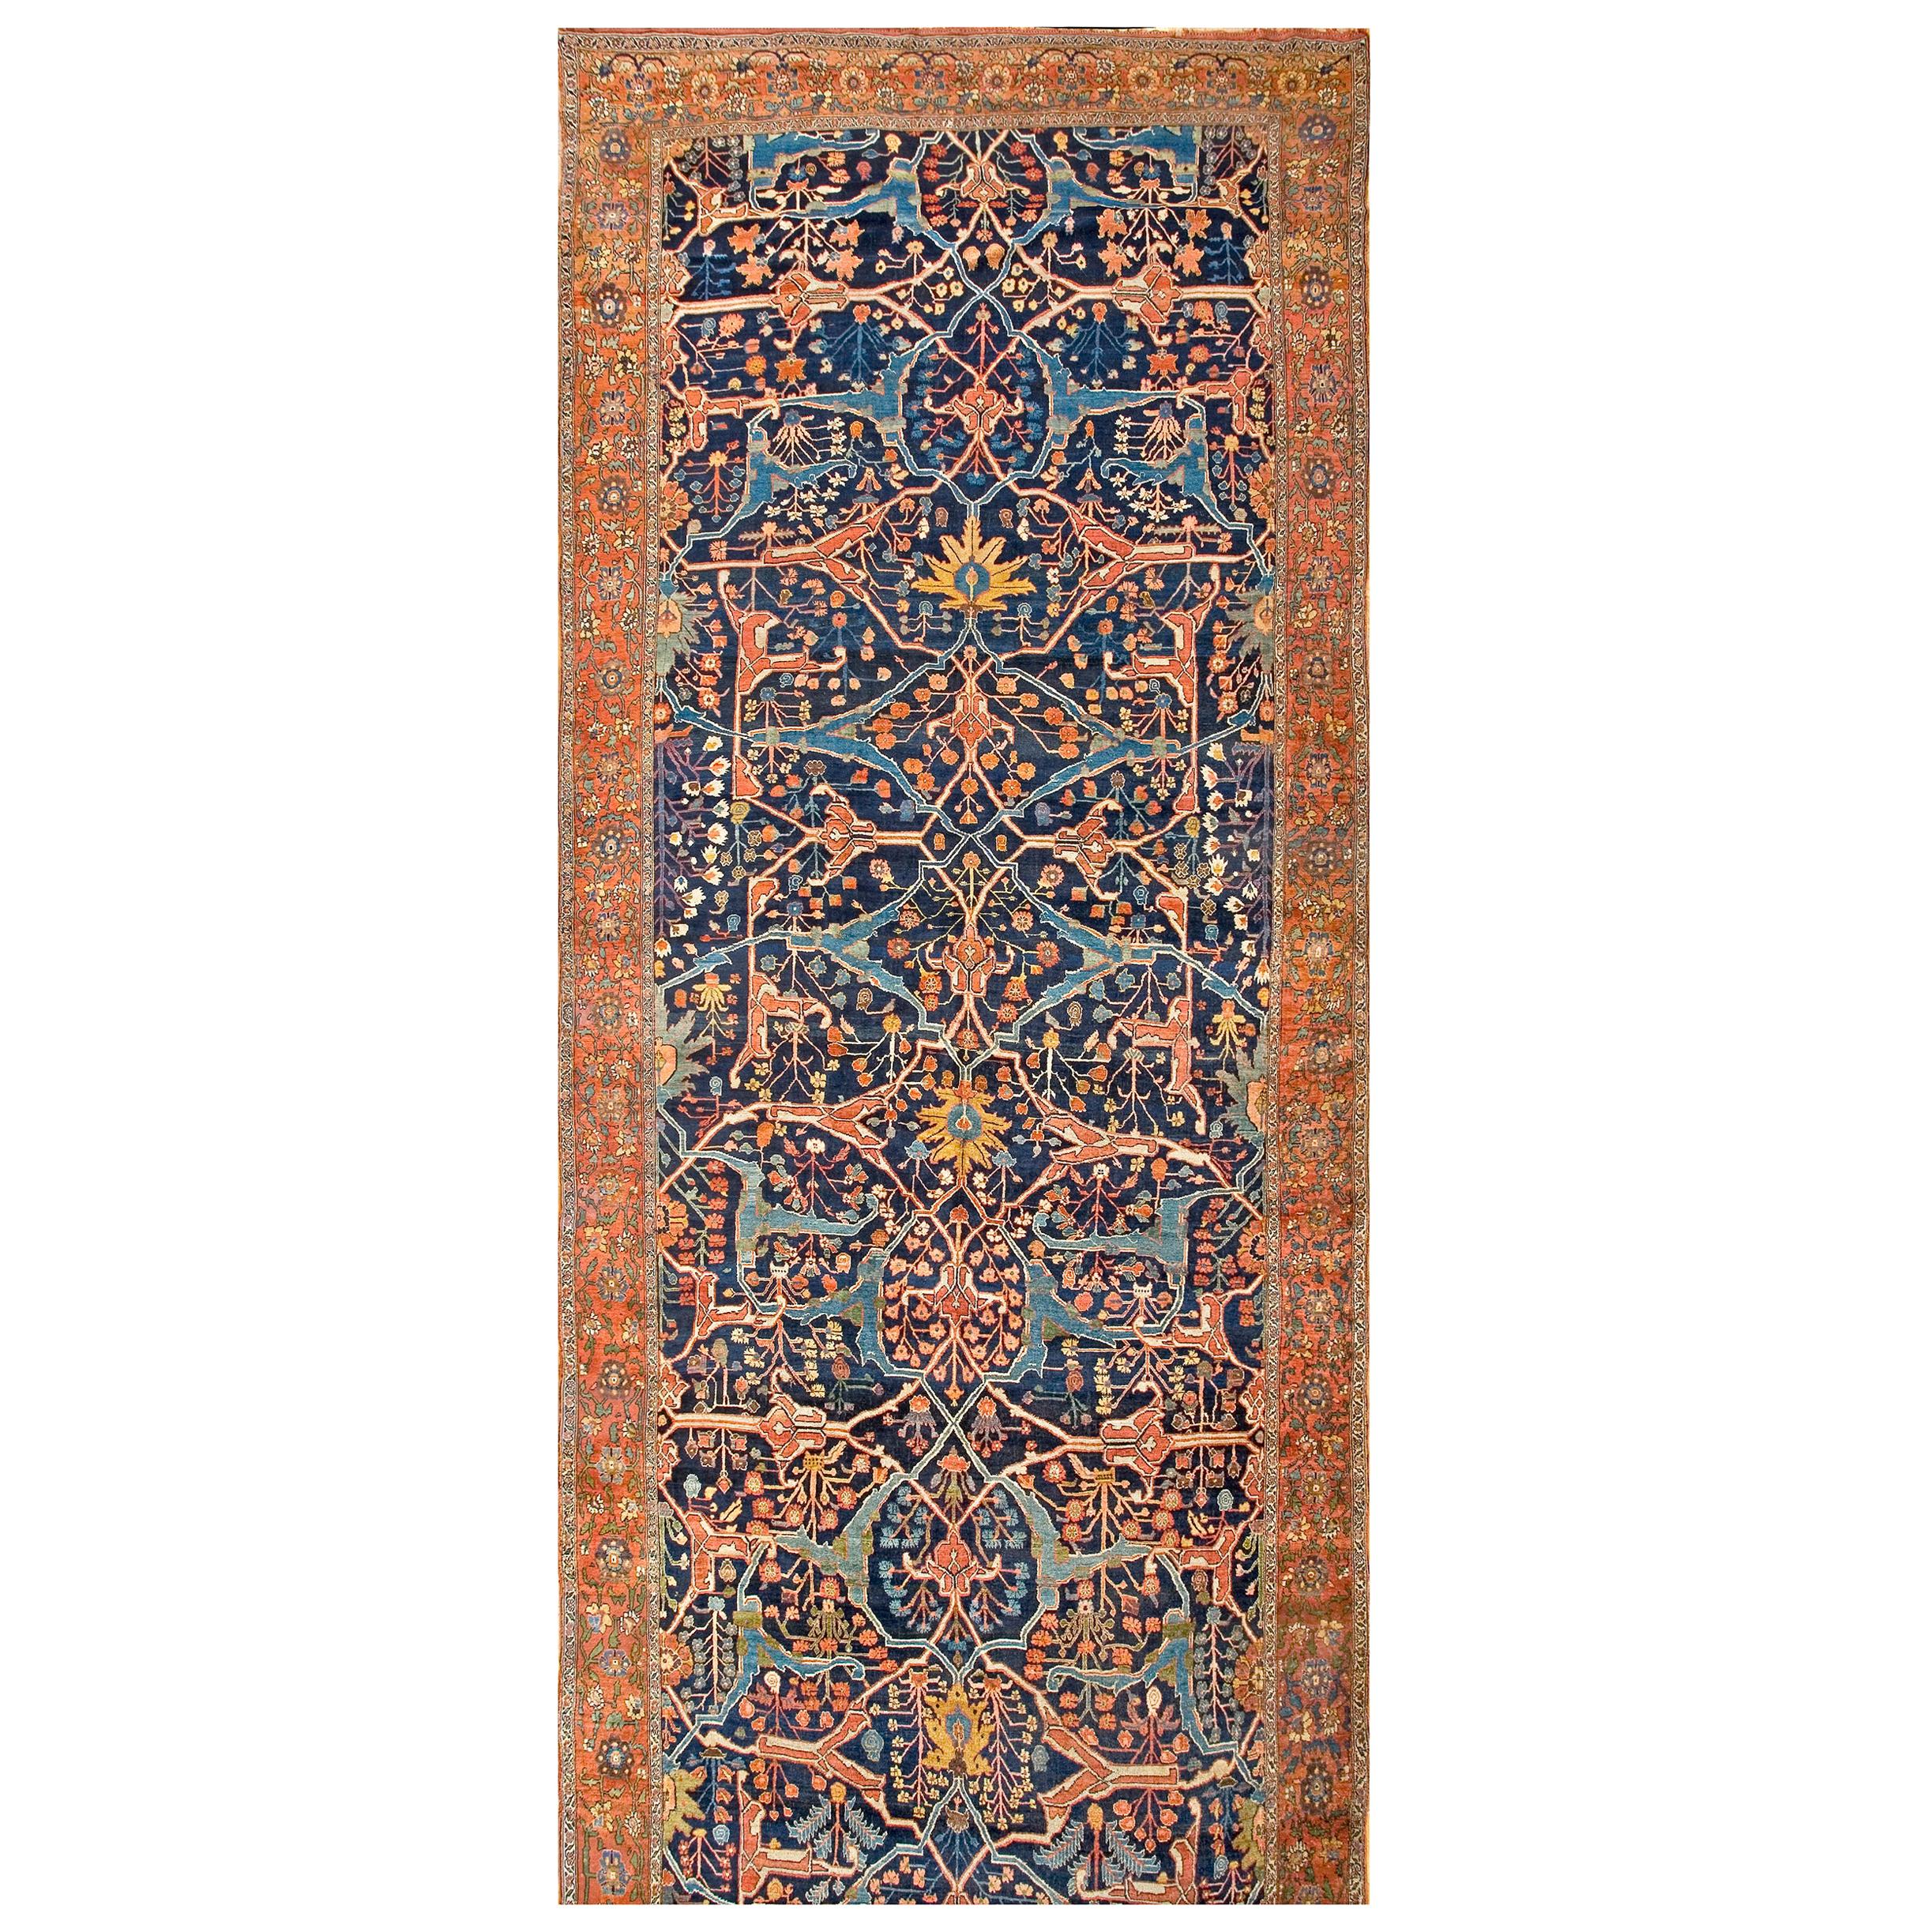 1870s Persian Garrus Bijar Carpet ( 8'10" x 23'8" - 270 x 720 cm )  For Sale